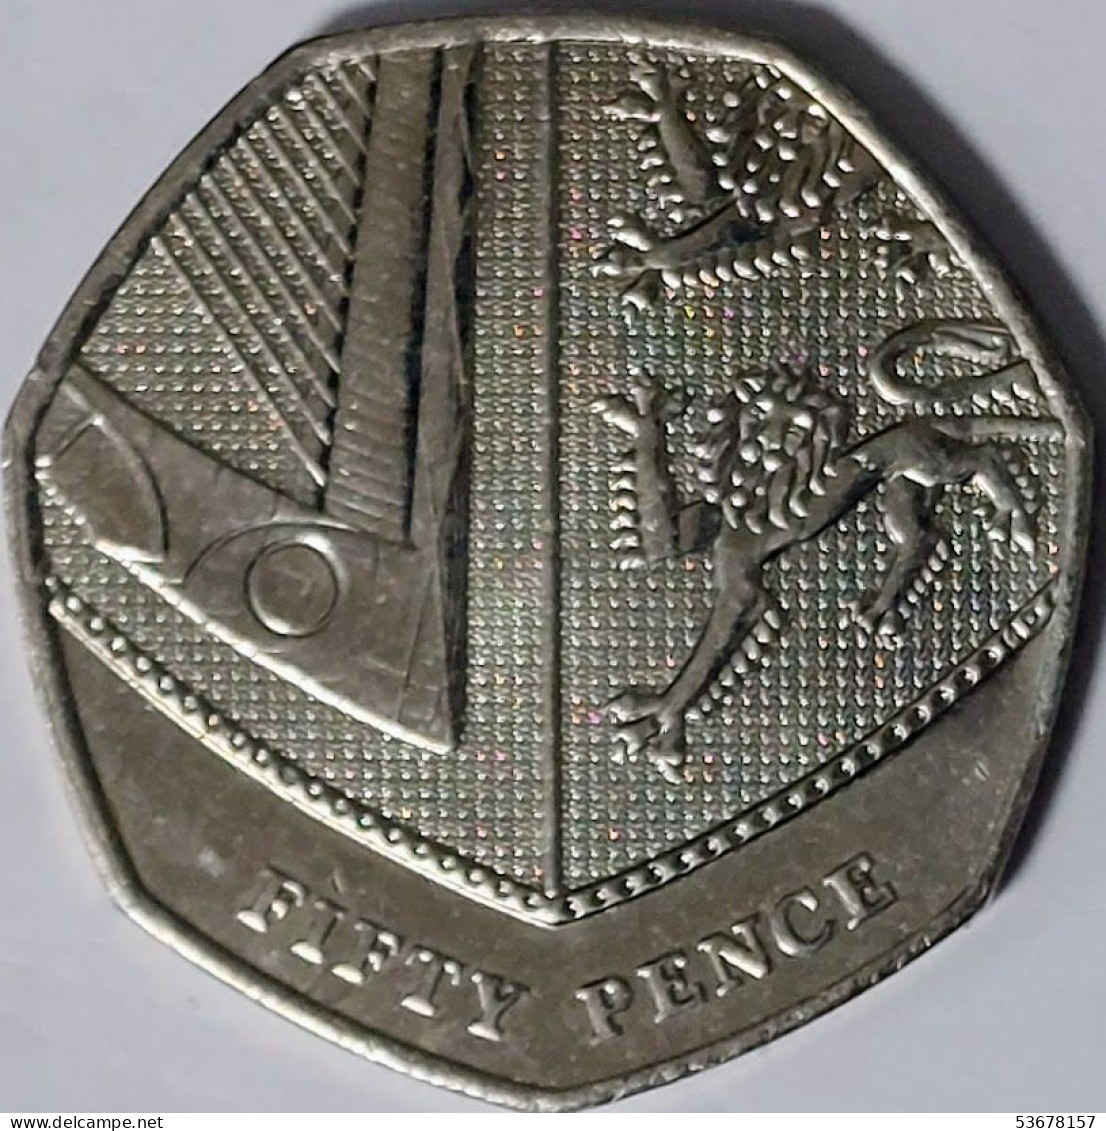 Great Britain - 50 Pence 2015, KM# 1337 (#2050) - 50 Pence